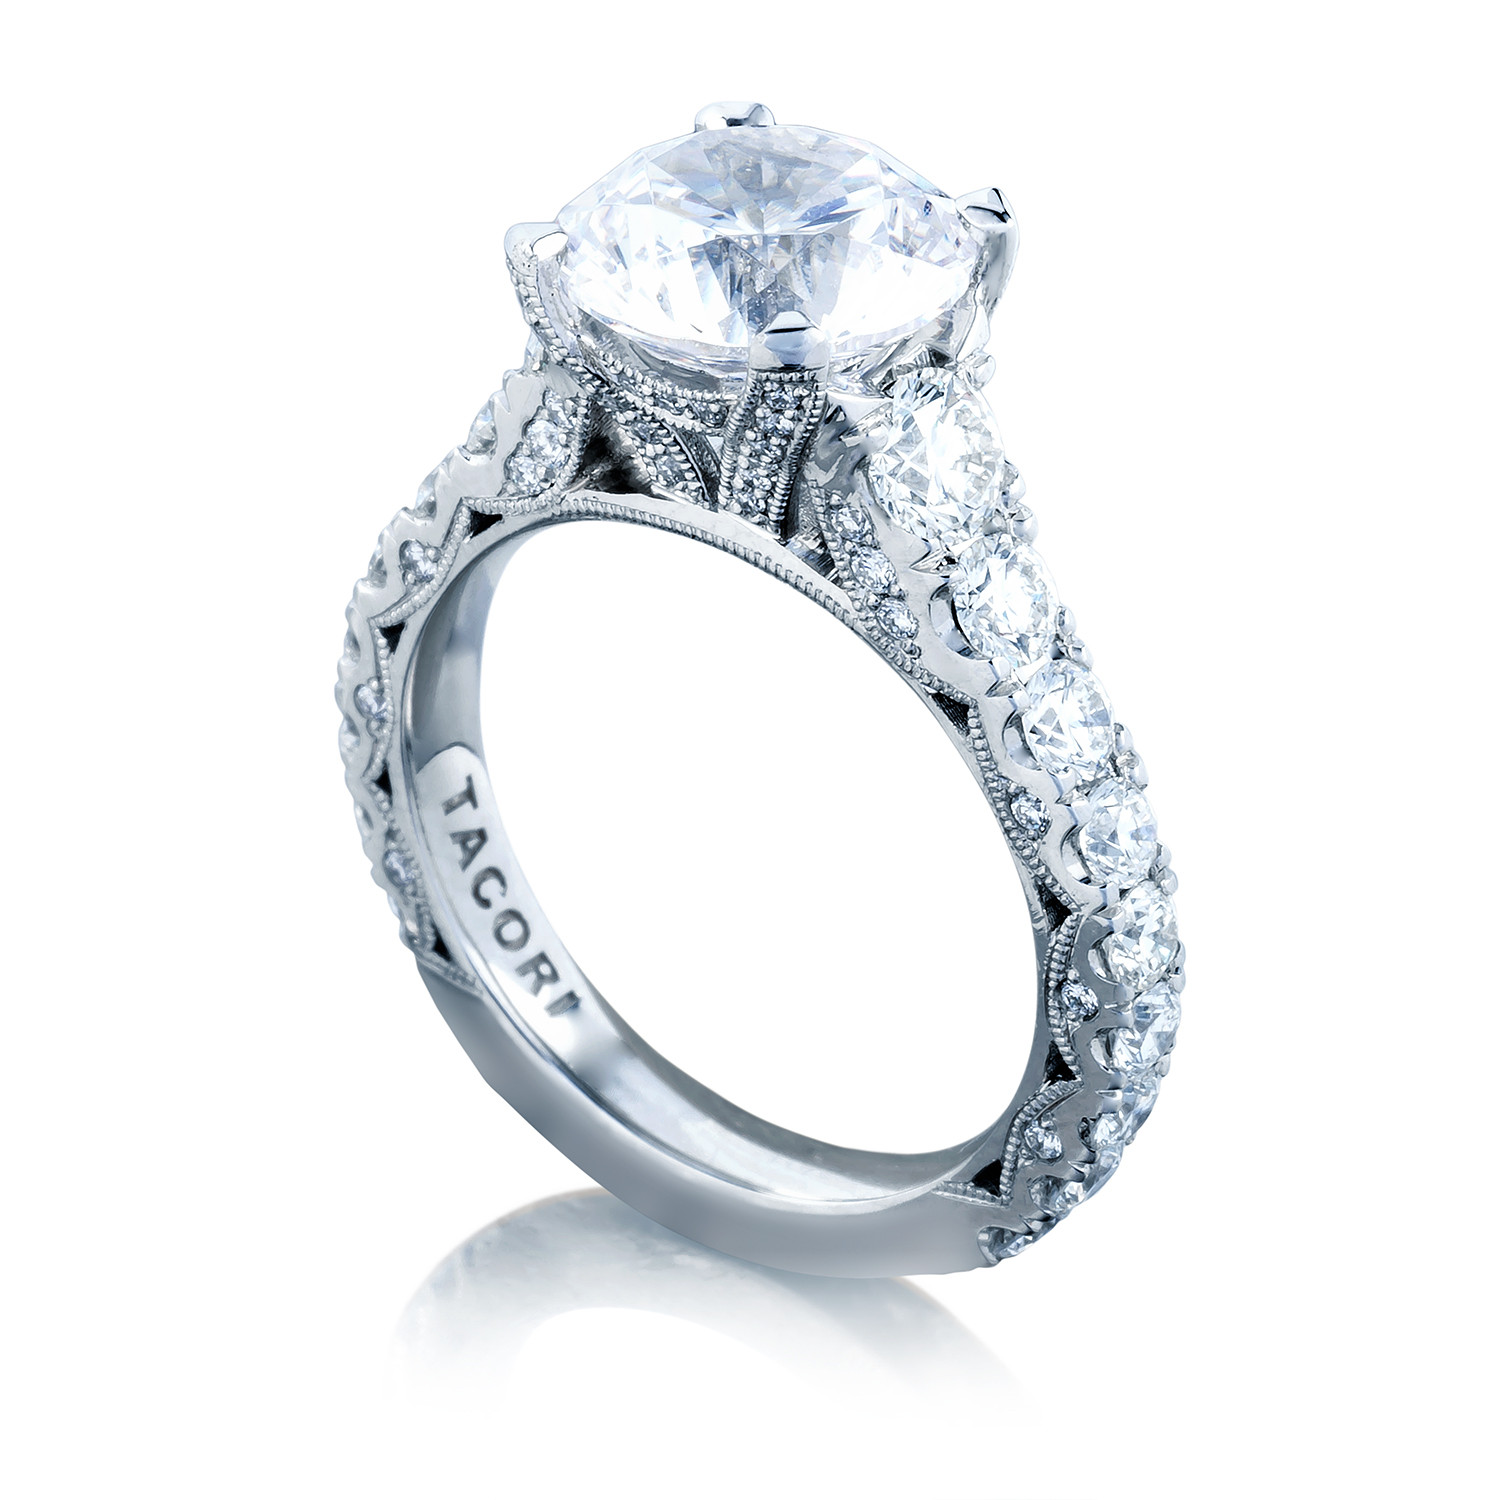 Tacori Wedding Rings
 Tacori Engagement Rings RoyalT Round Setting 1 65ctw